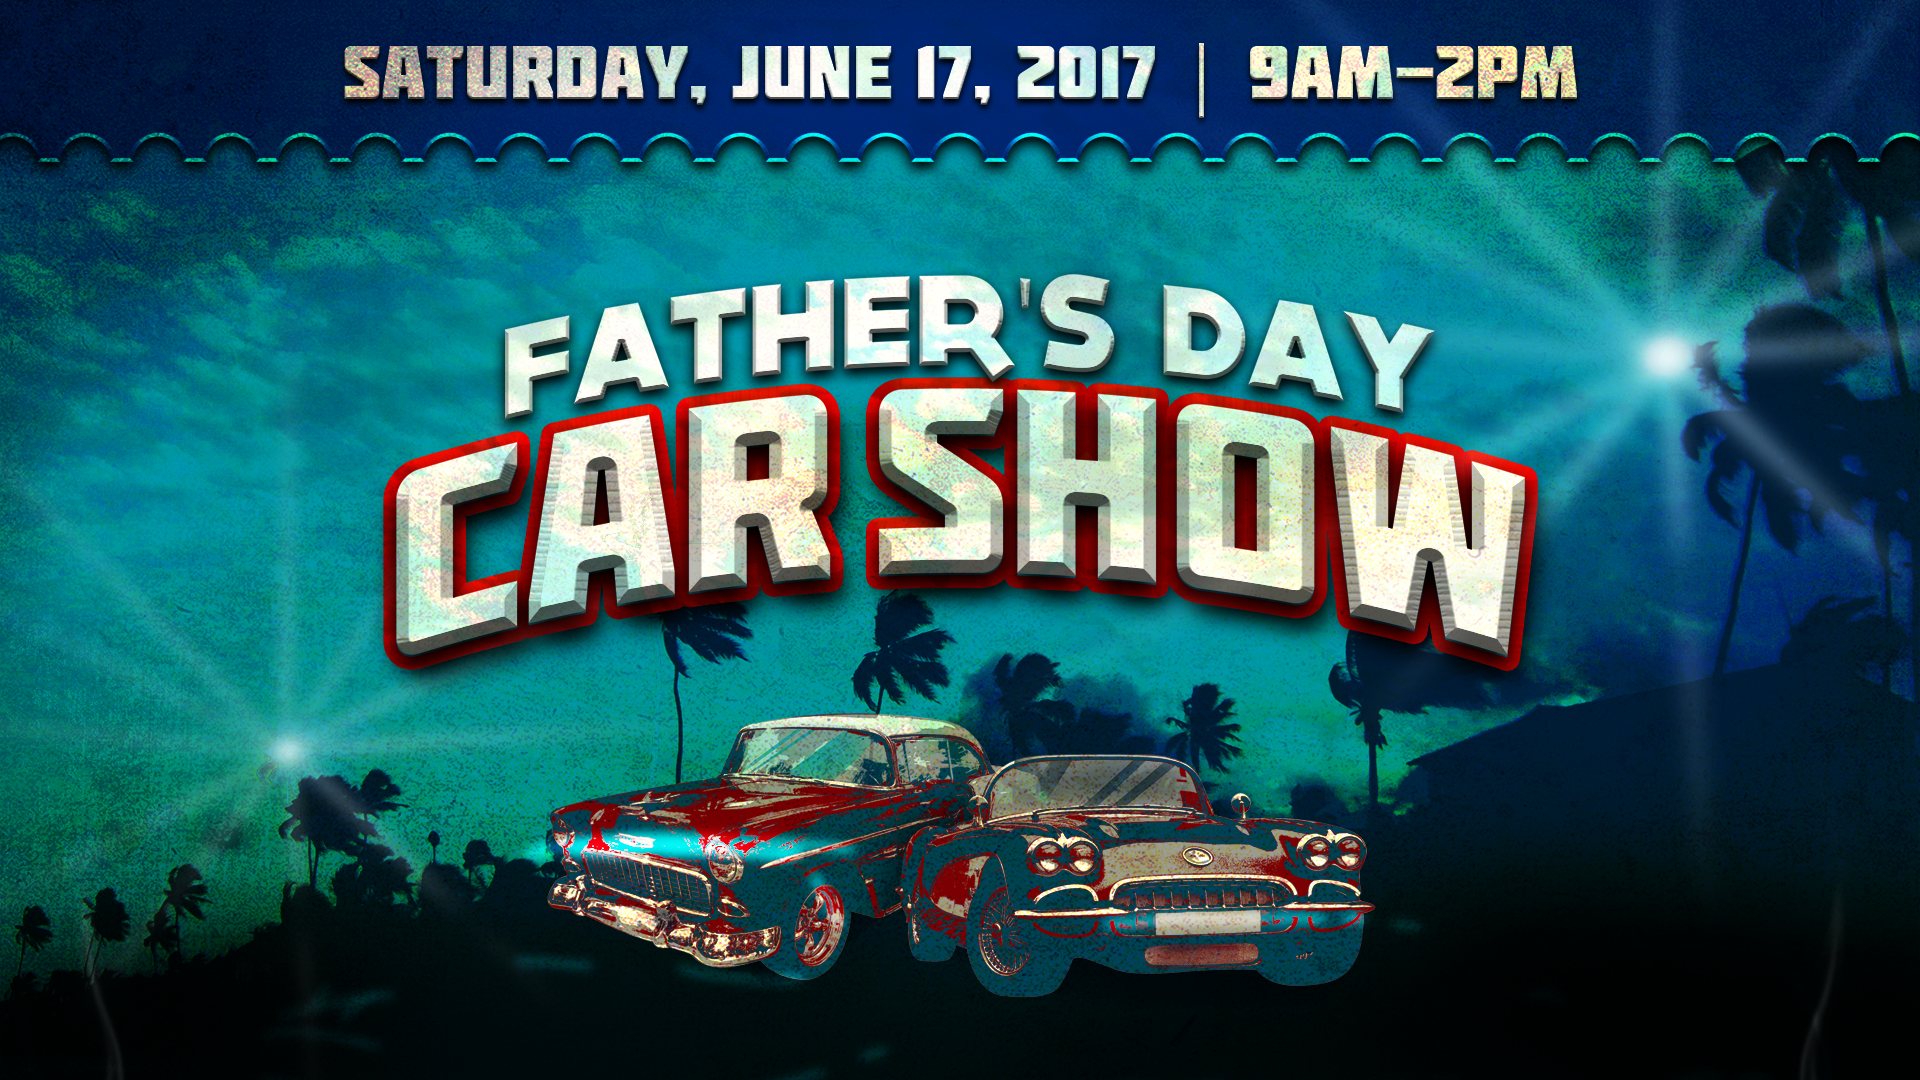 arundel-christian-church-father-s-day-car-show